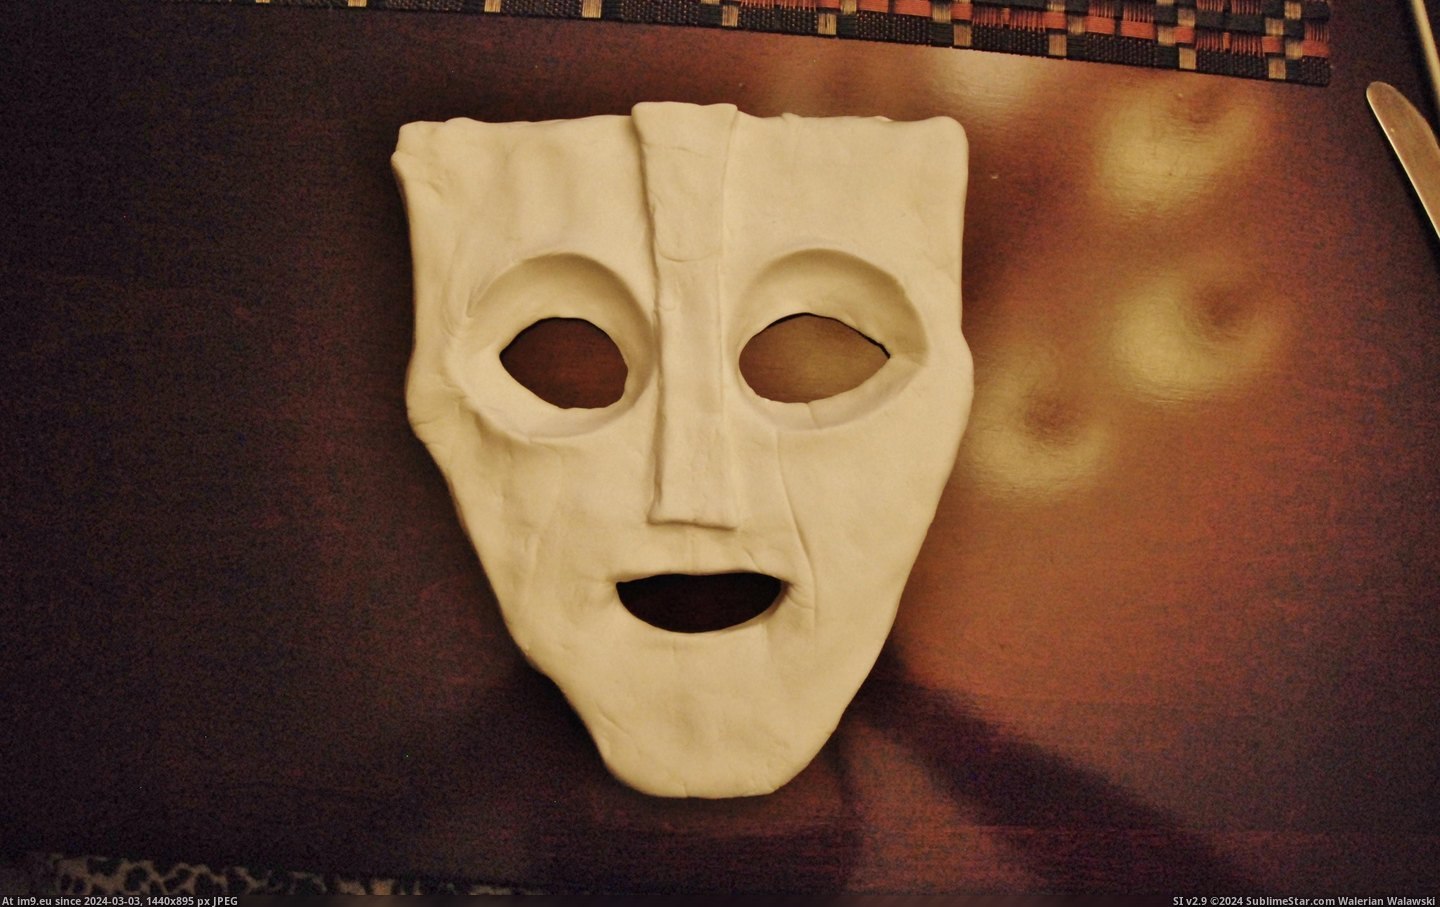 #Movie #Wanted #Stores #Superheroes #Manag #Son #Mask [Pics] My son wanted the mask from the movie the Mask, but it's all superheroes in stores these days so I made it for him. Manag Pic. (Obraz z album My r/PICS favs))